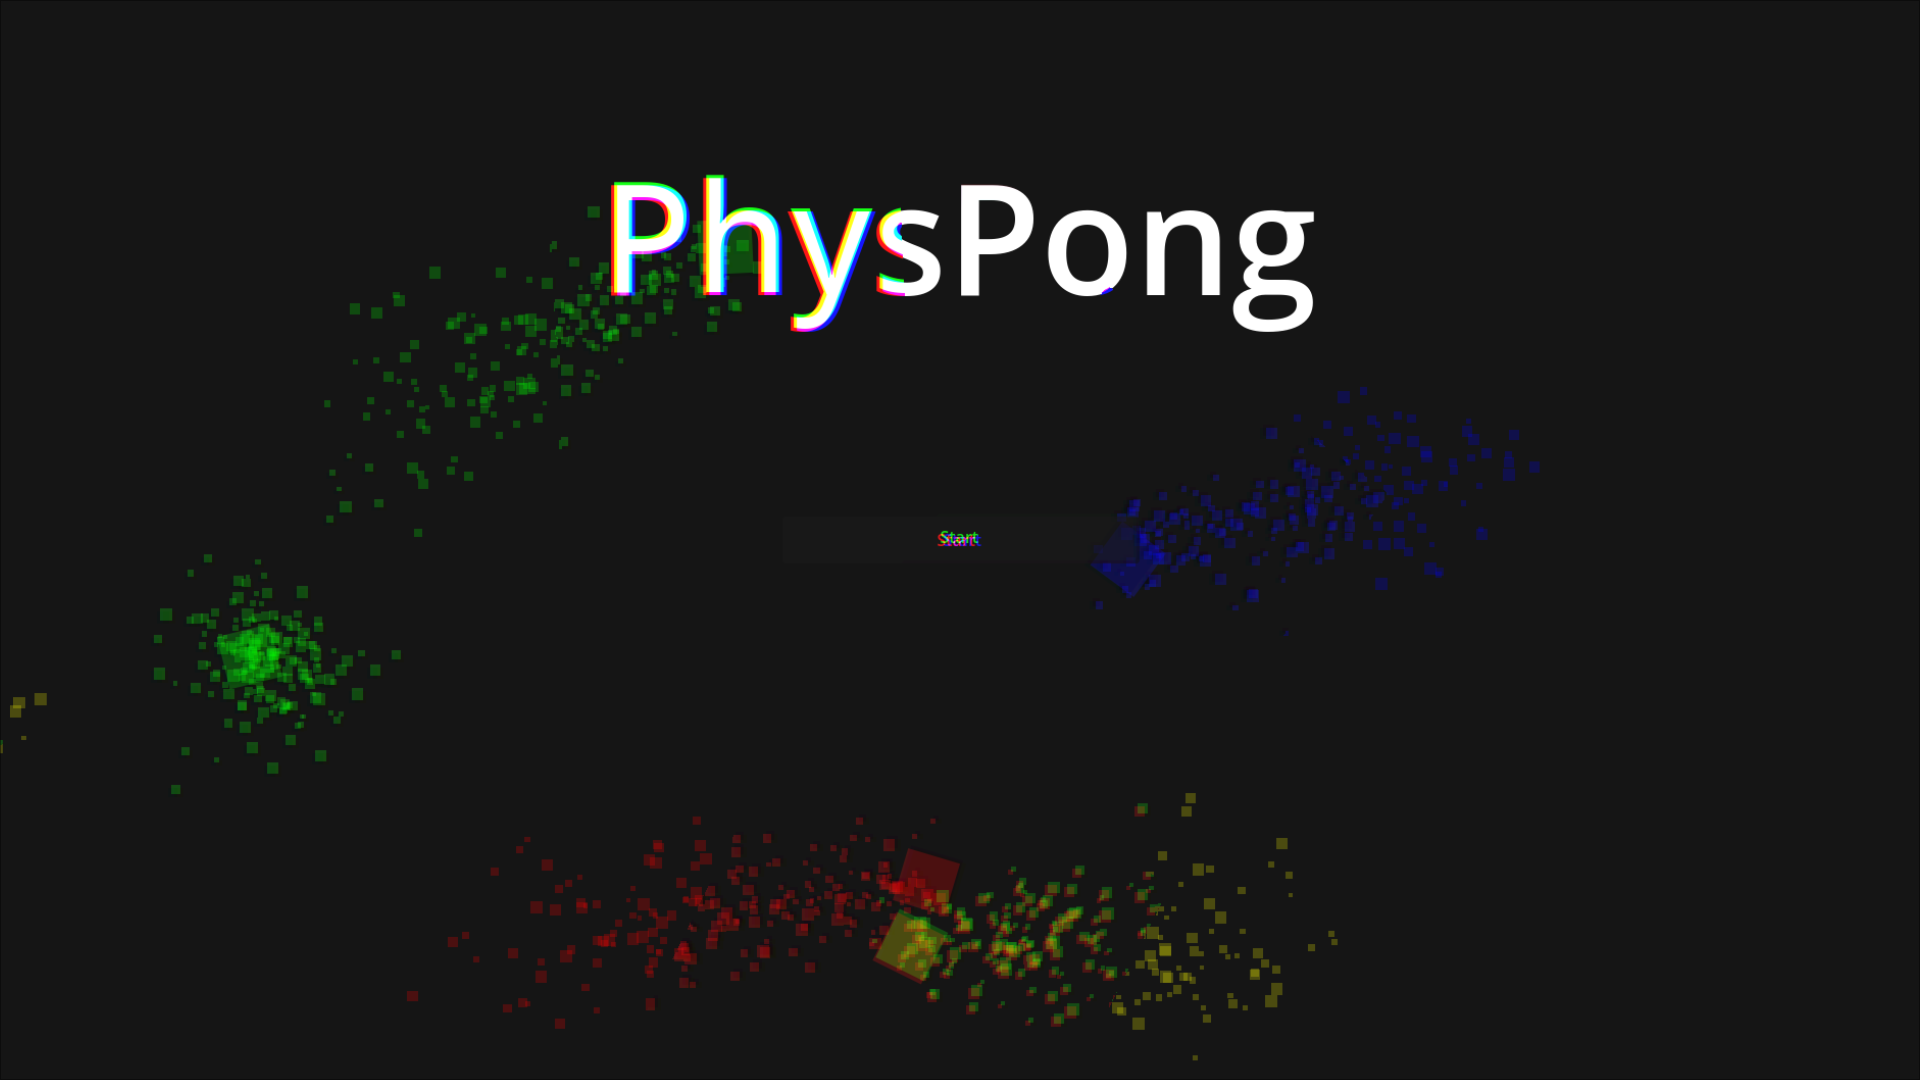 PhysPong